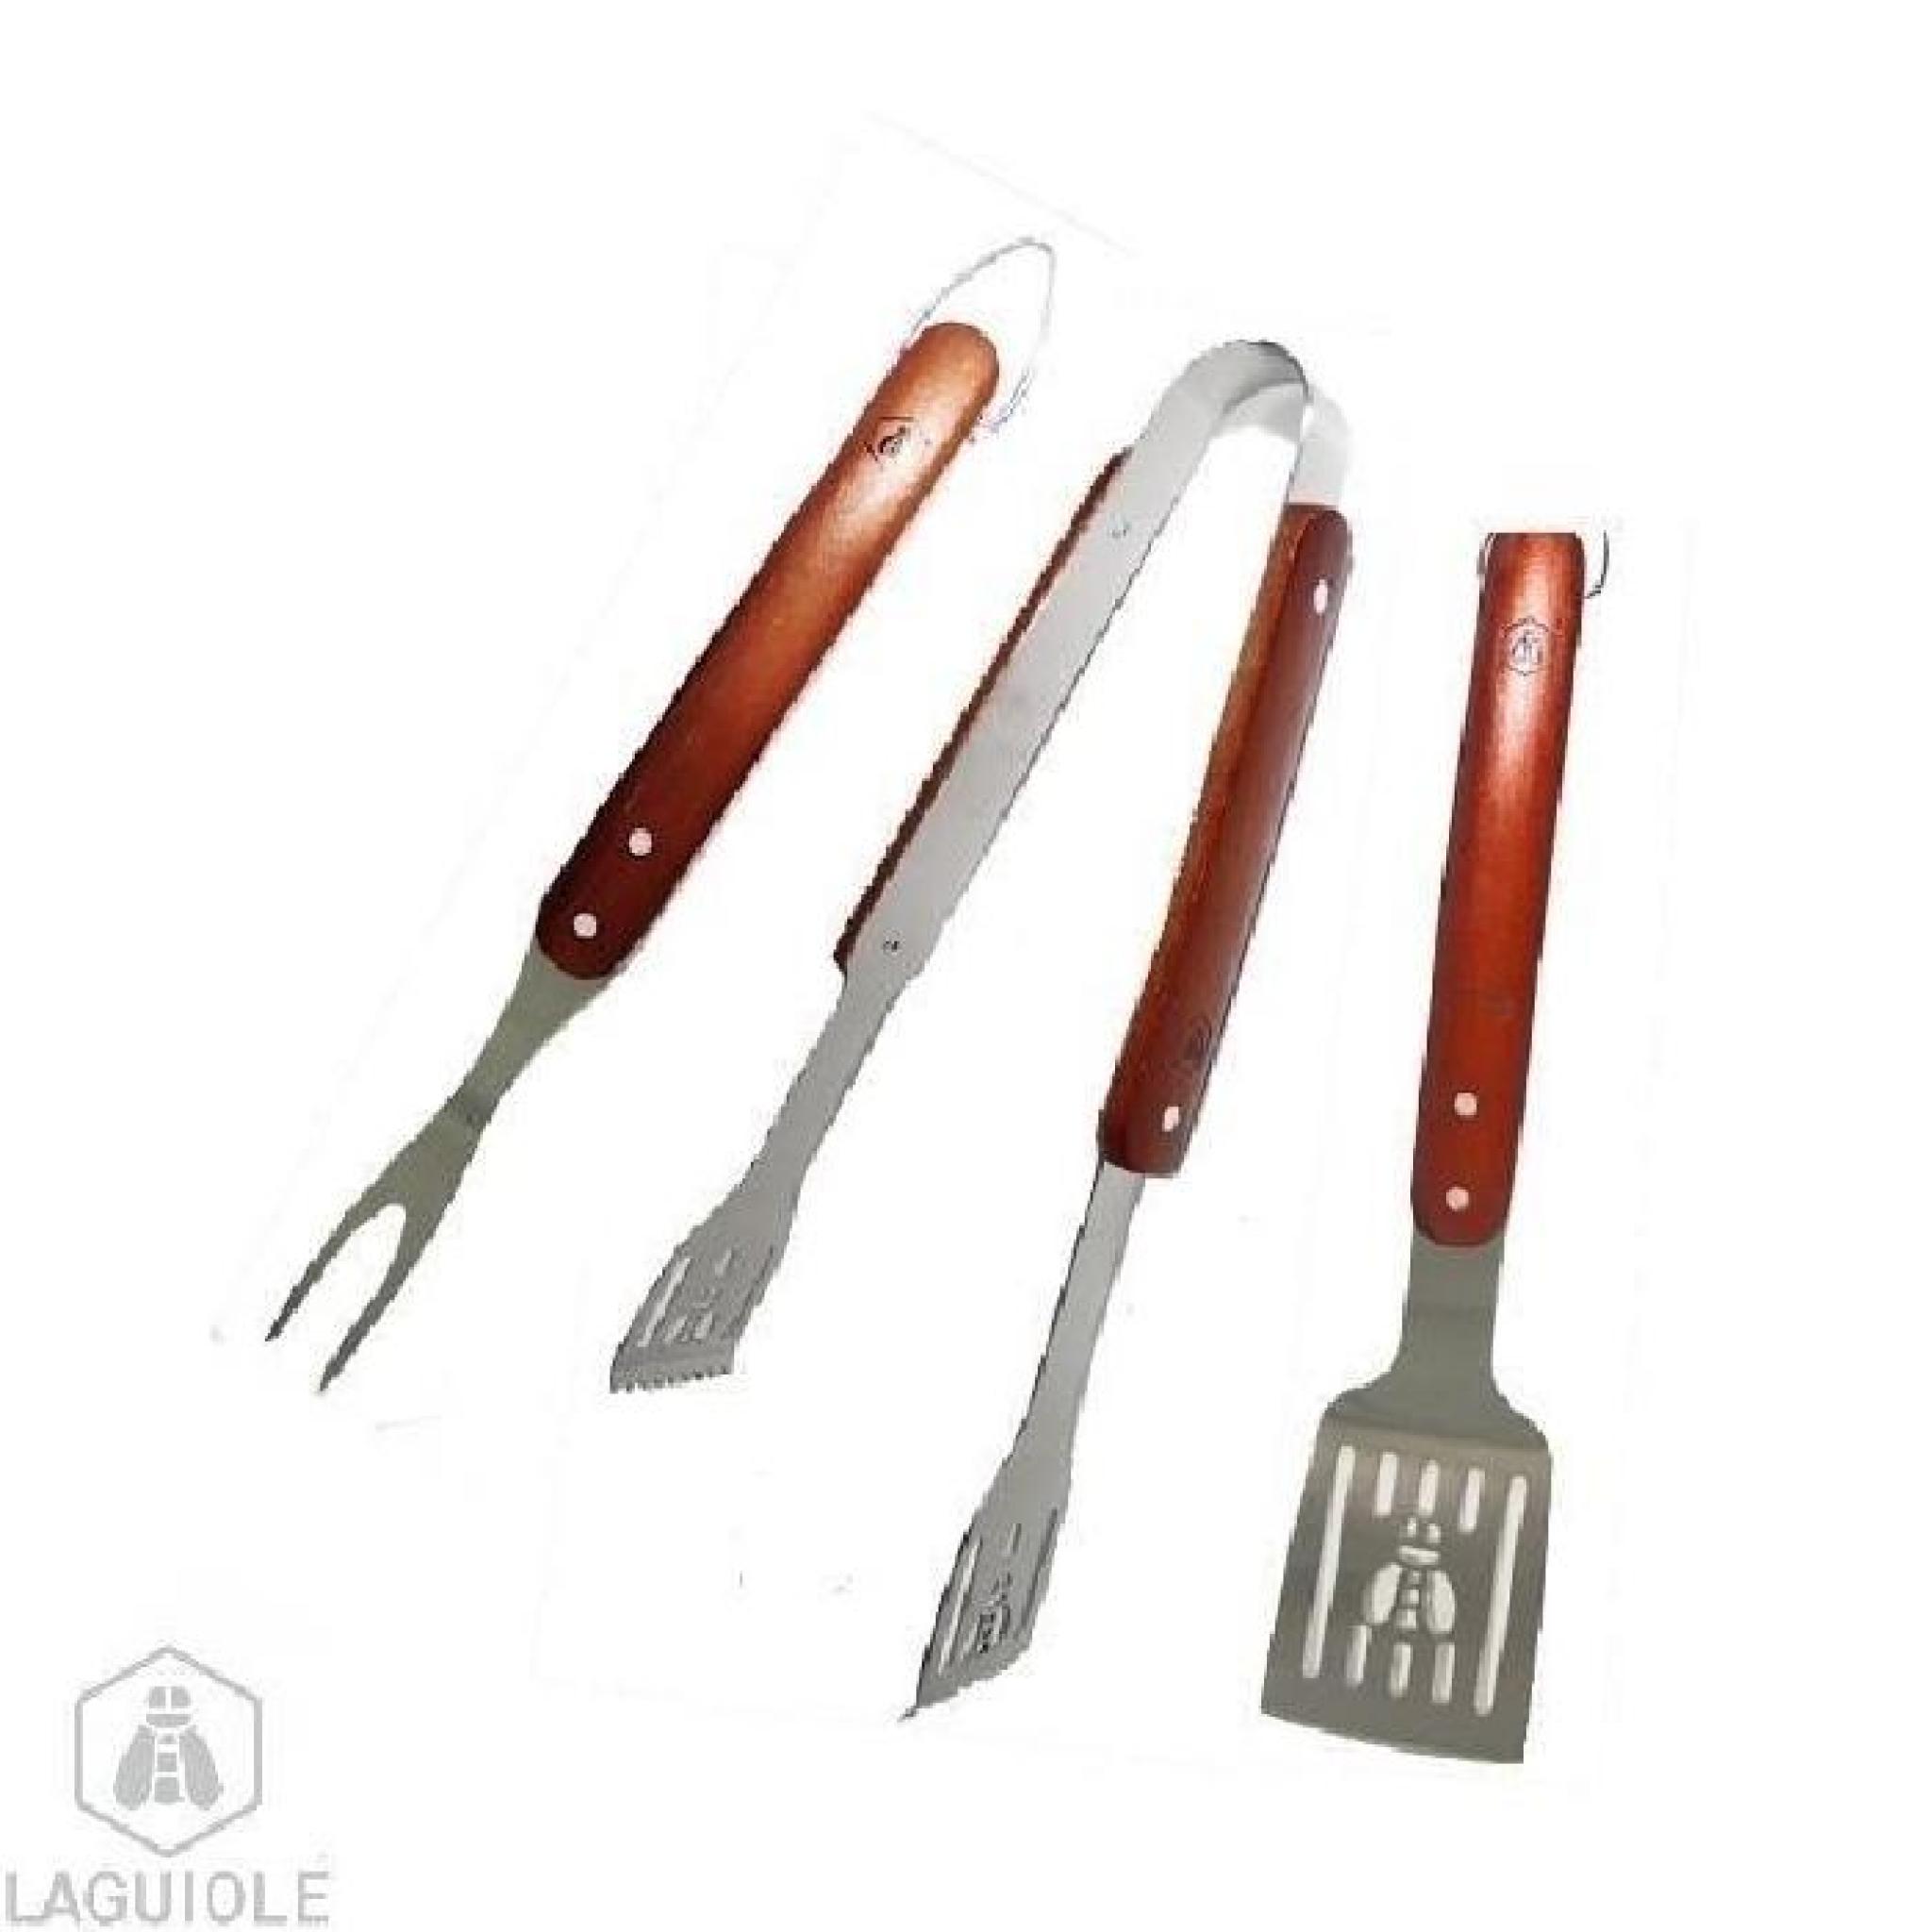 LAGUIOLE Kit barbecue. spatule, pince et fourchette barbecue inox. Lg 38cm - idéal 